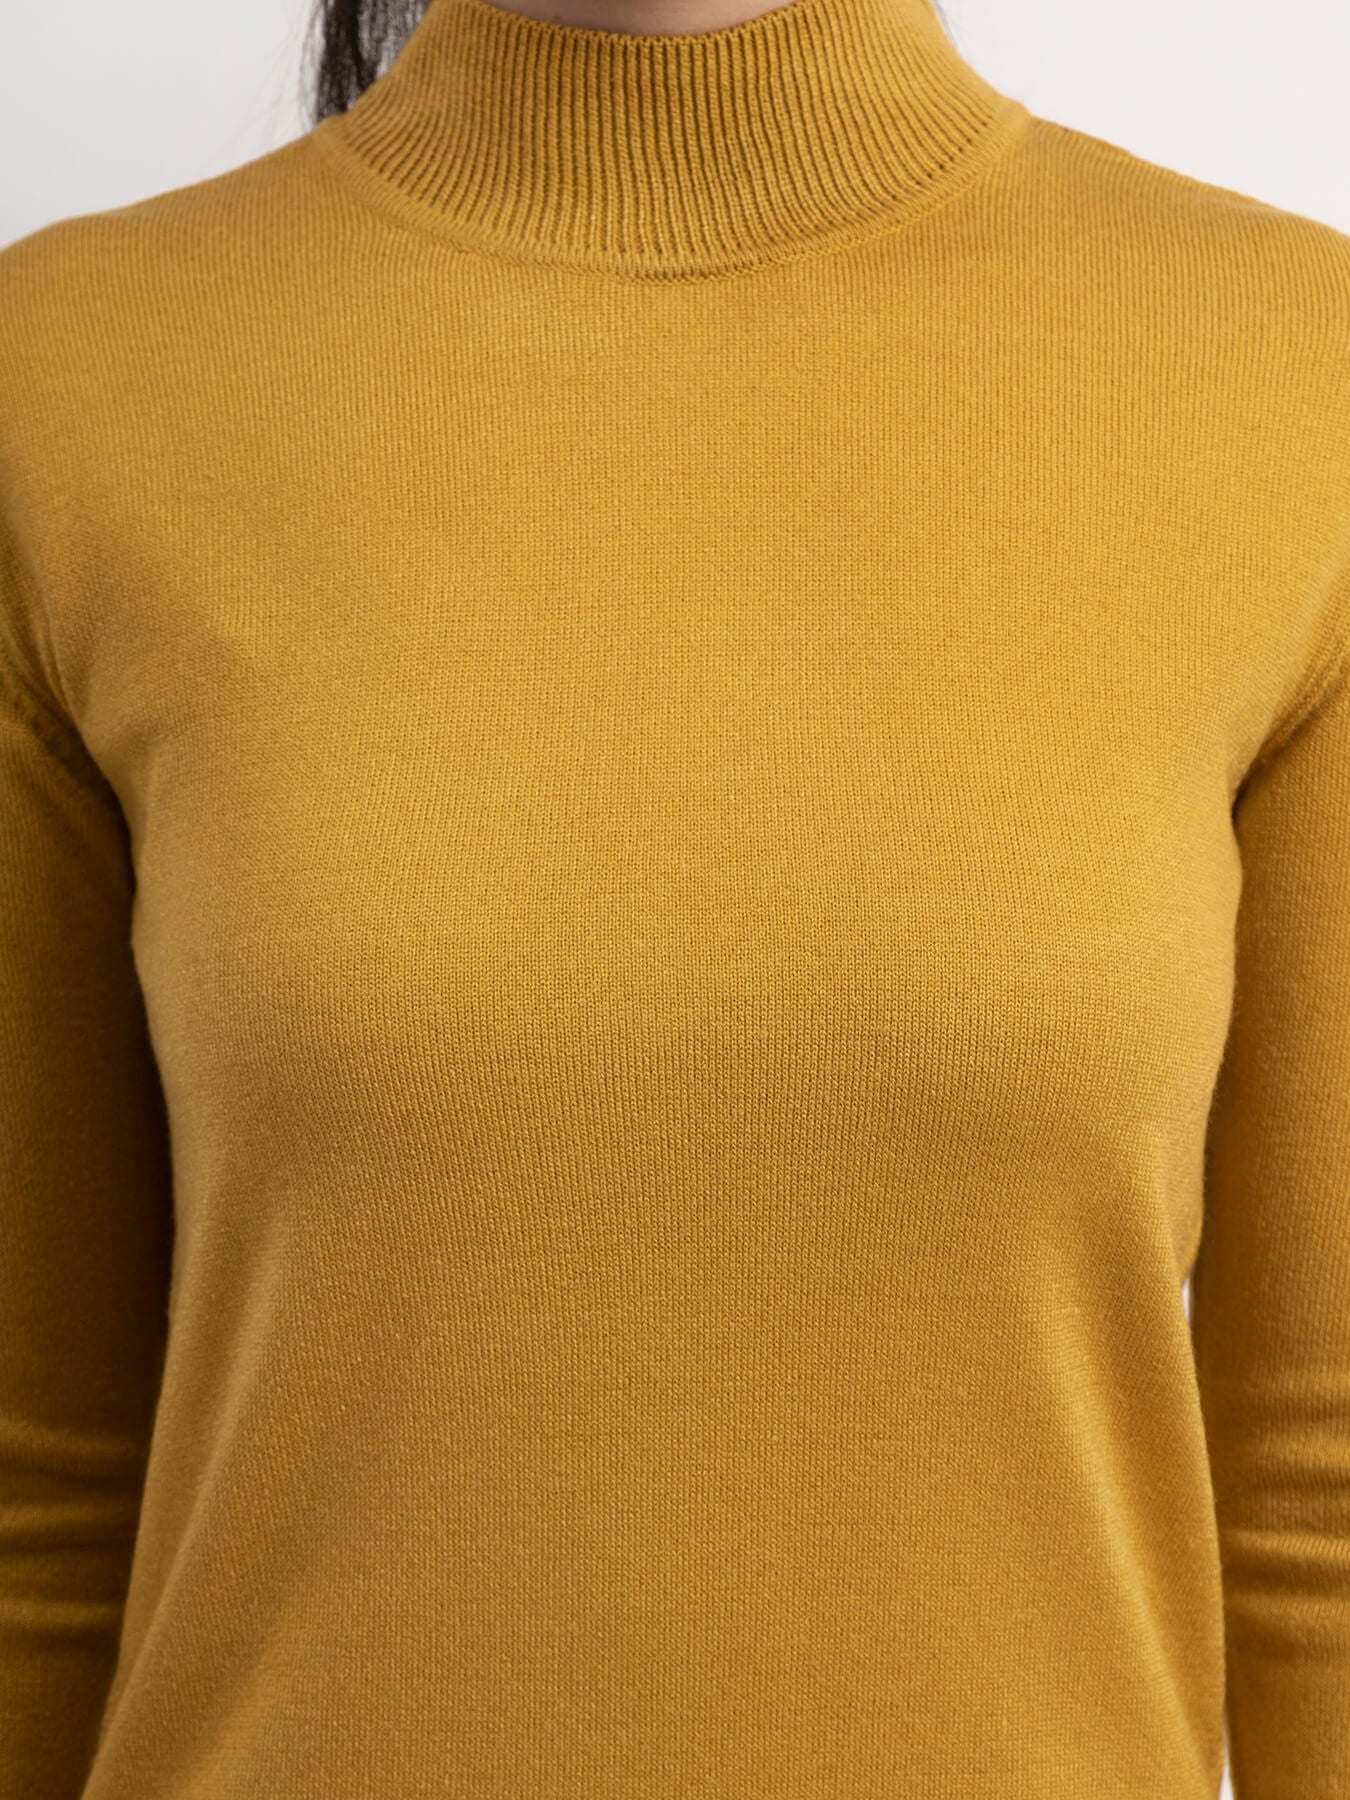 LivSoft Band Neck Sweater - Mustard